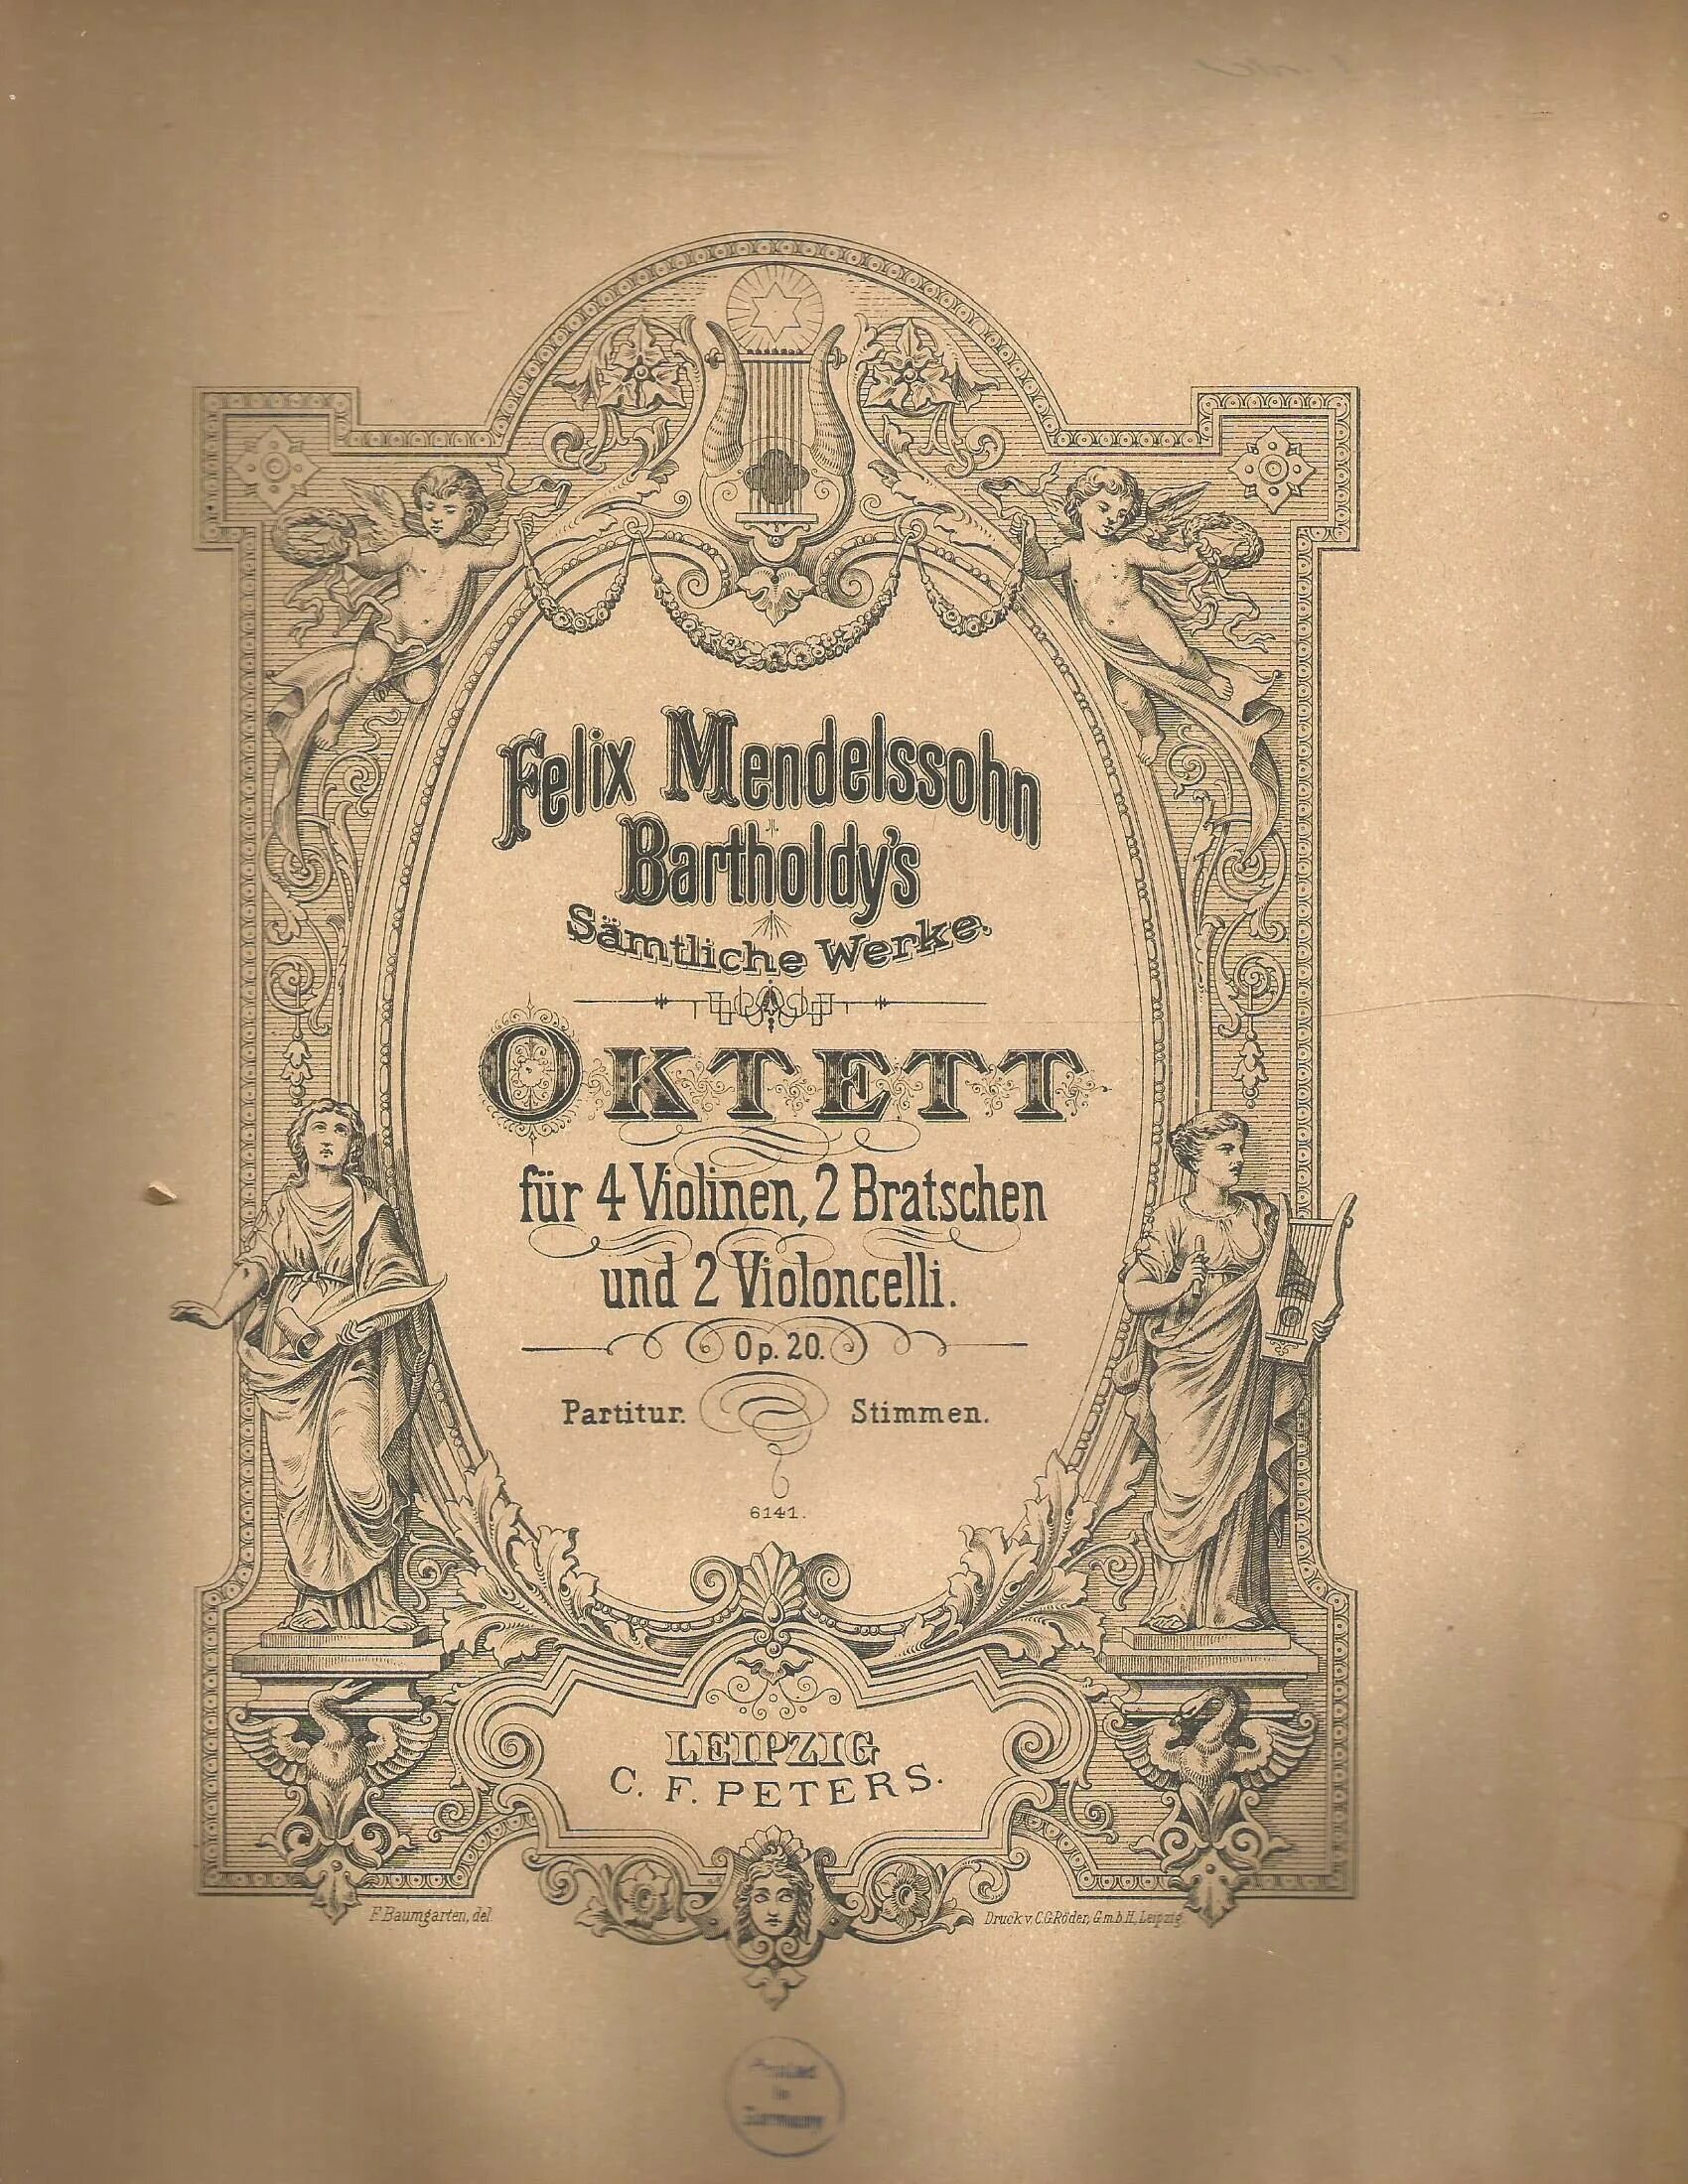 C f peters. Felix Mendelssohn Bartholdy's Sammtliche Compositionen fur pianoforte solo.